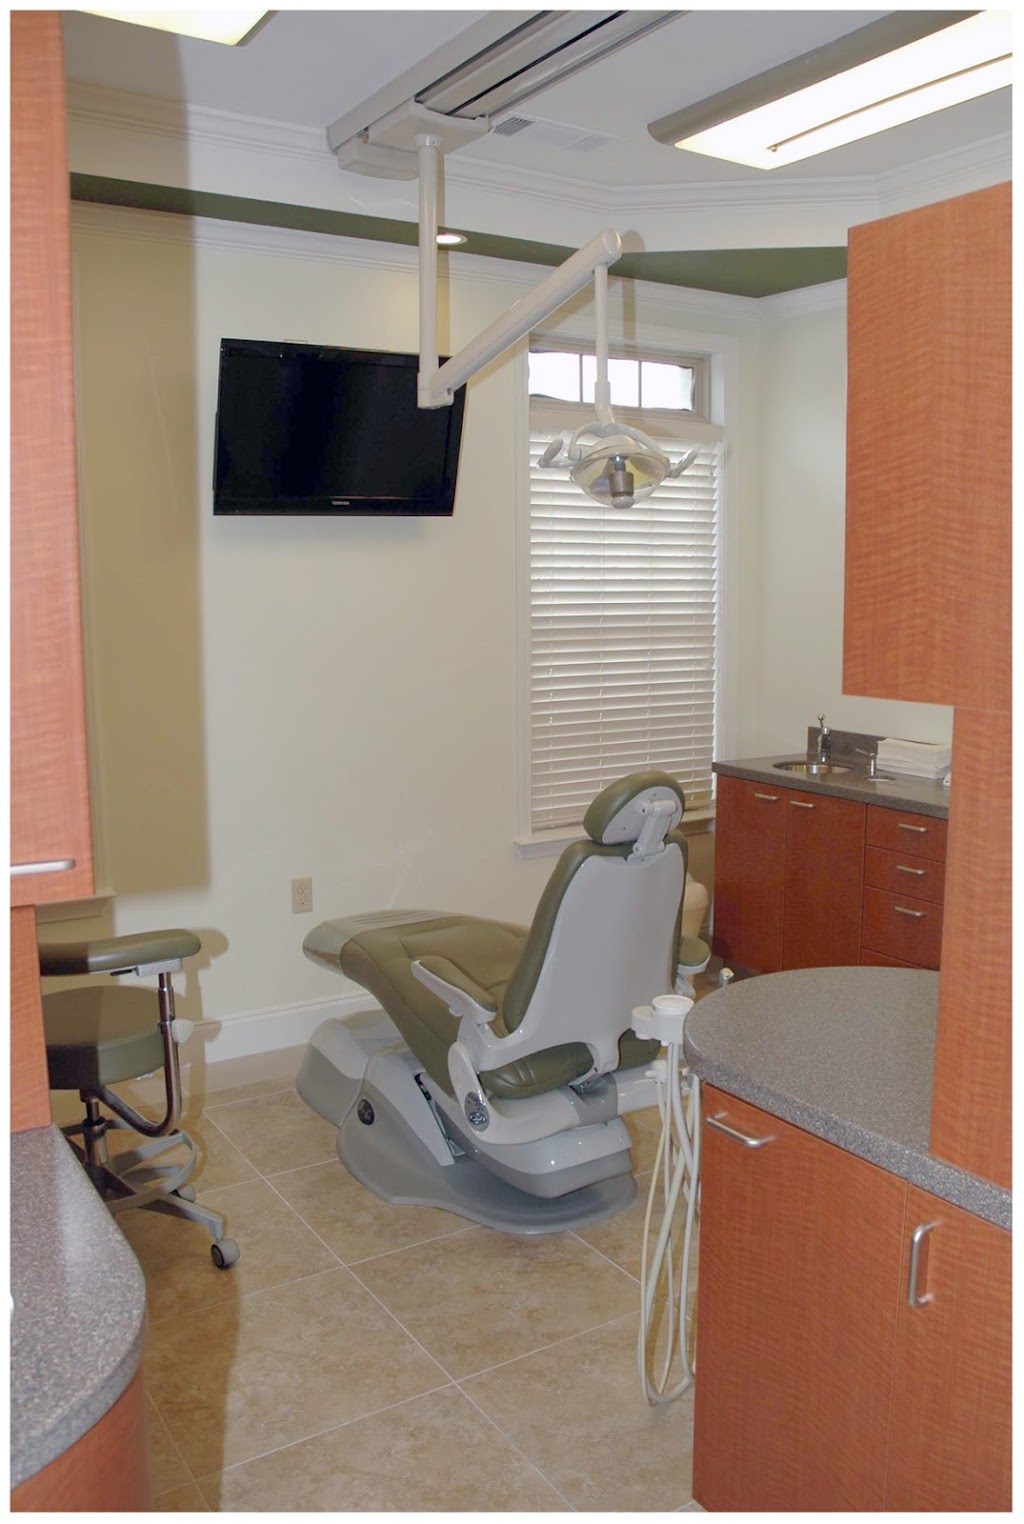 Vo Dentistry | 1605 Buford Dr, Lawrenceville, GA 30043, USA | Phone: (678) 985-8087